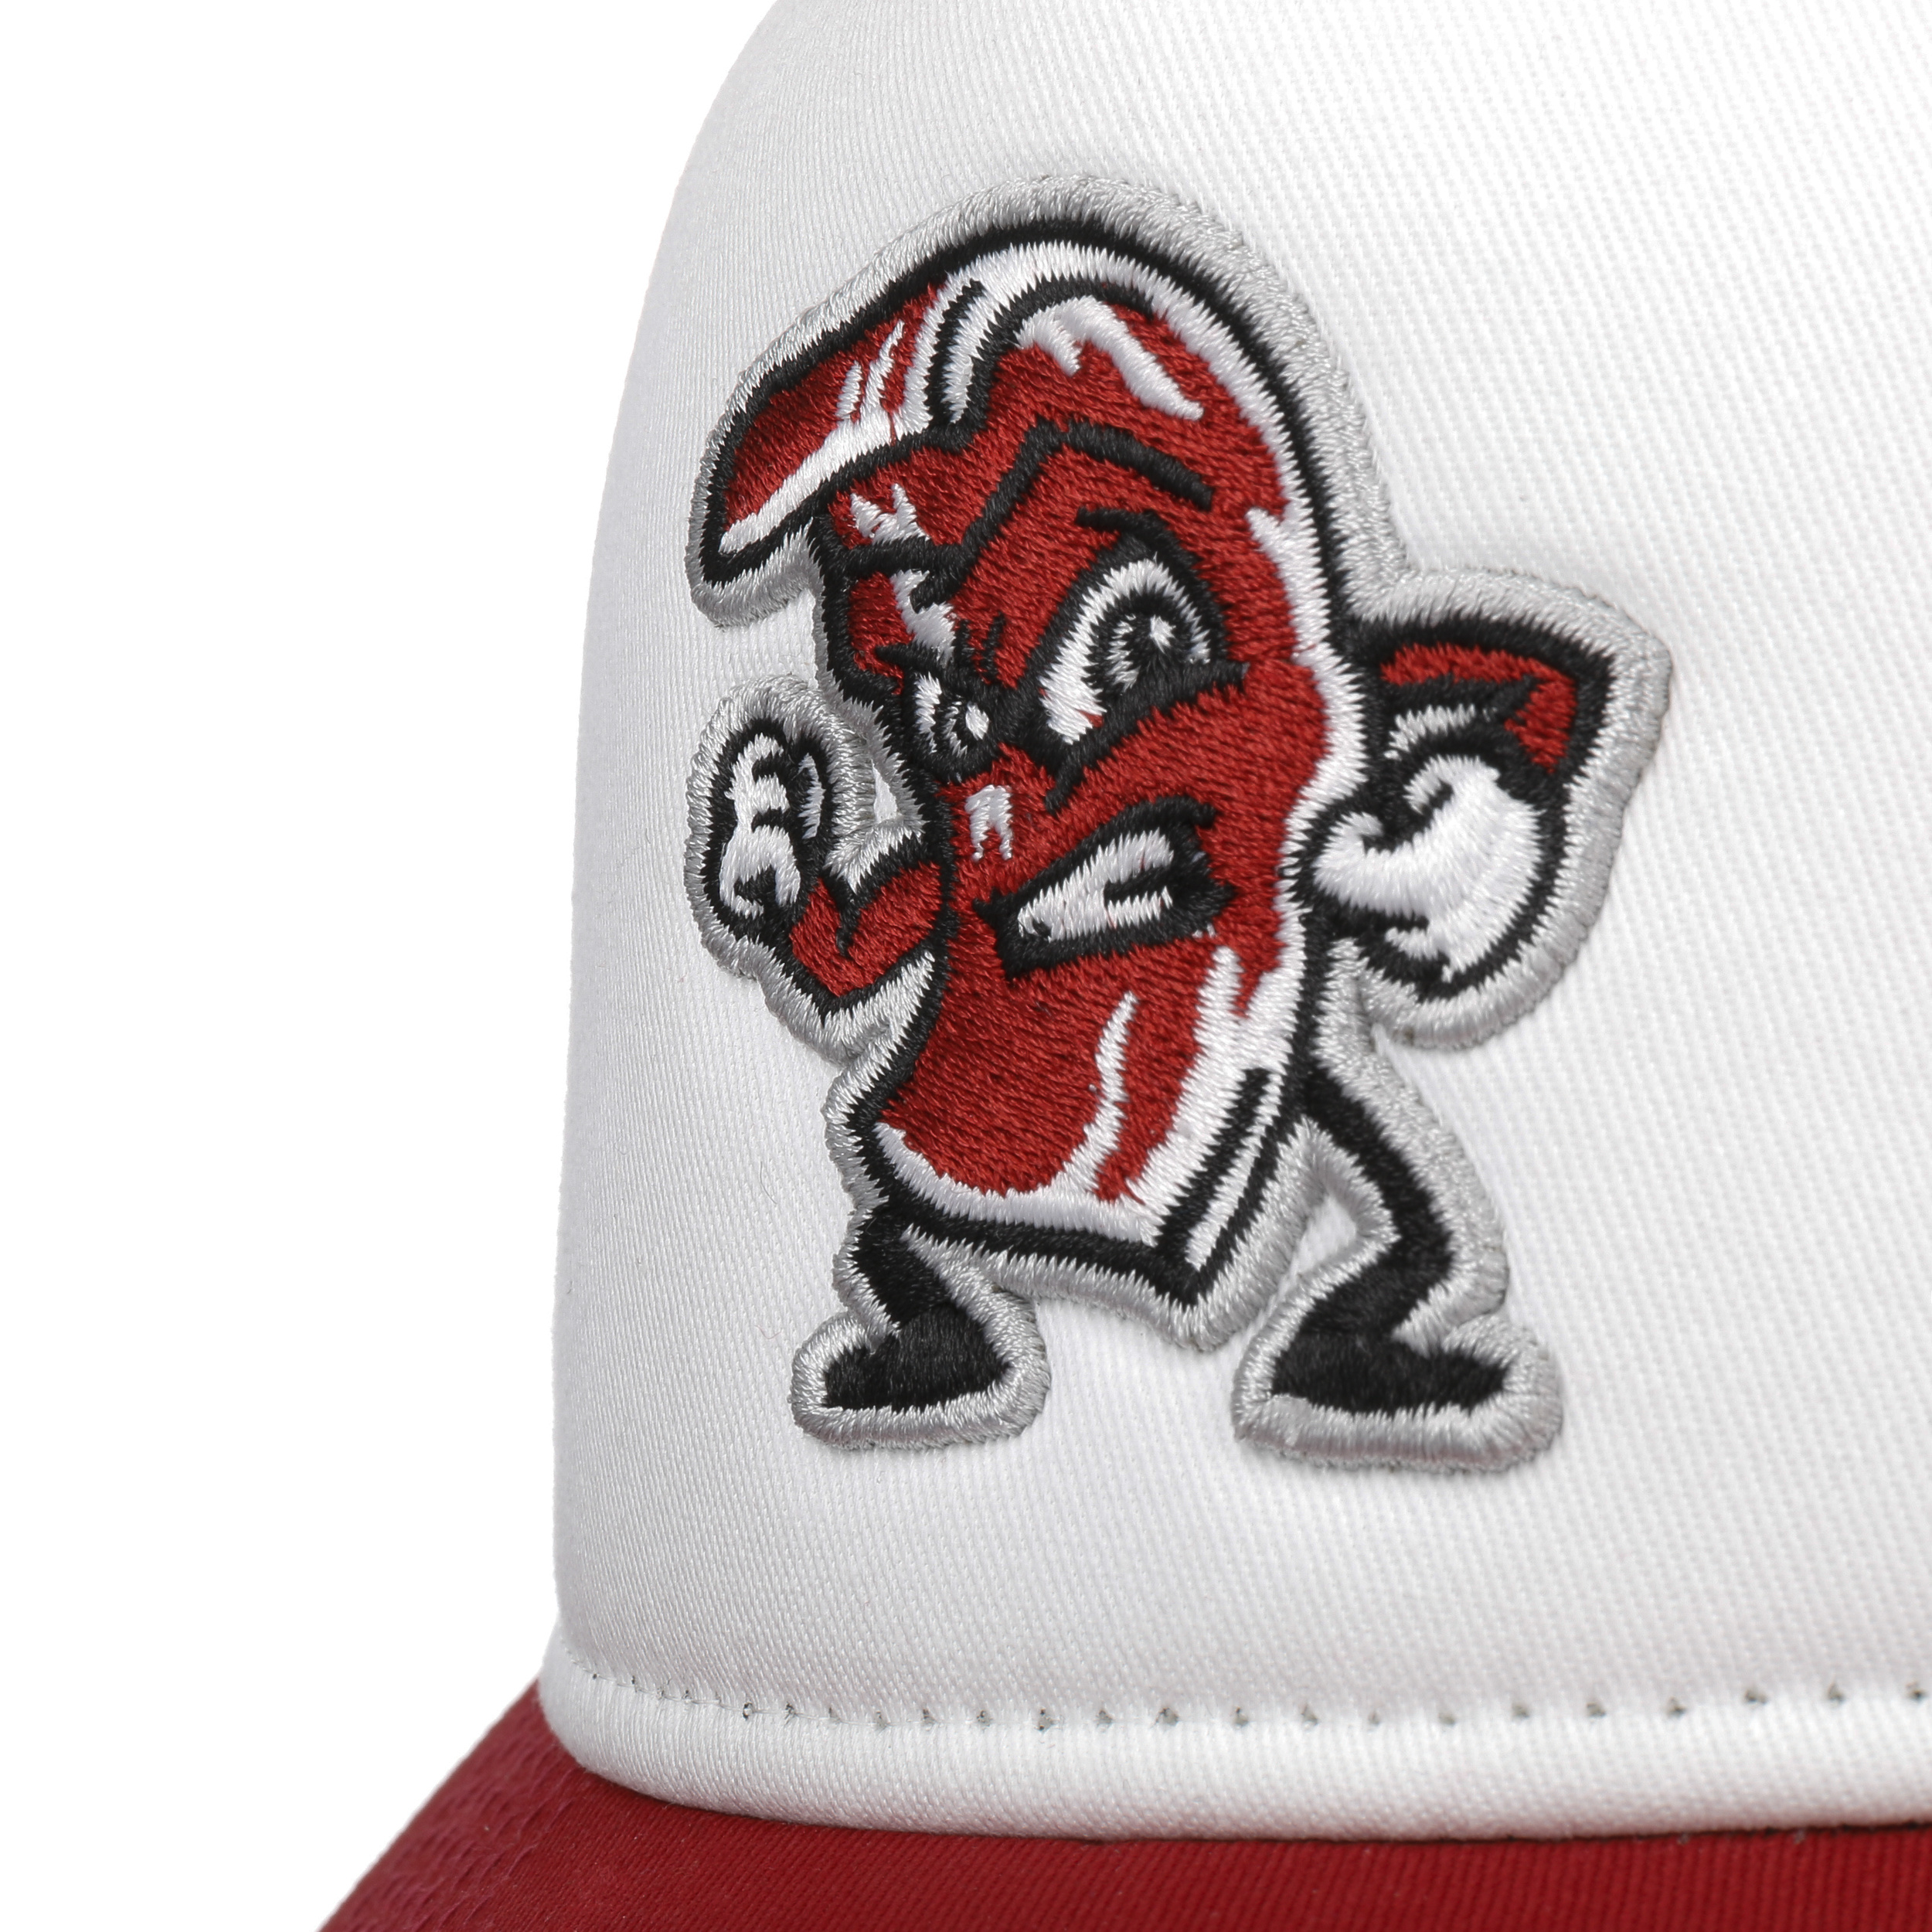 The Iron Pigs Little League Baseball Hat